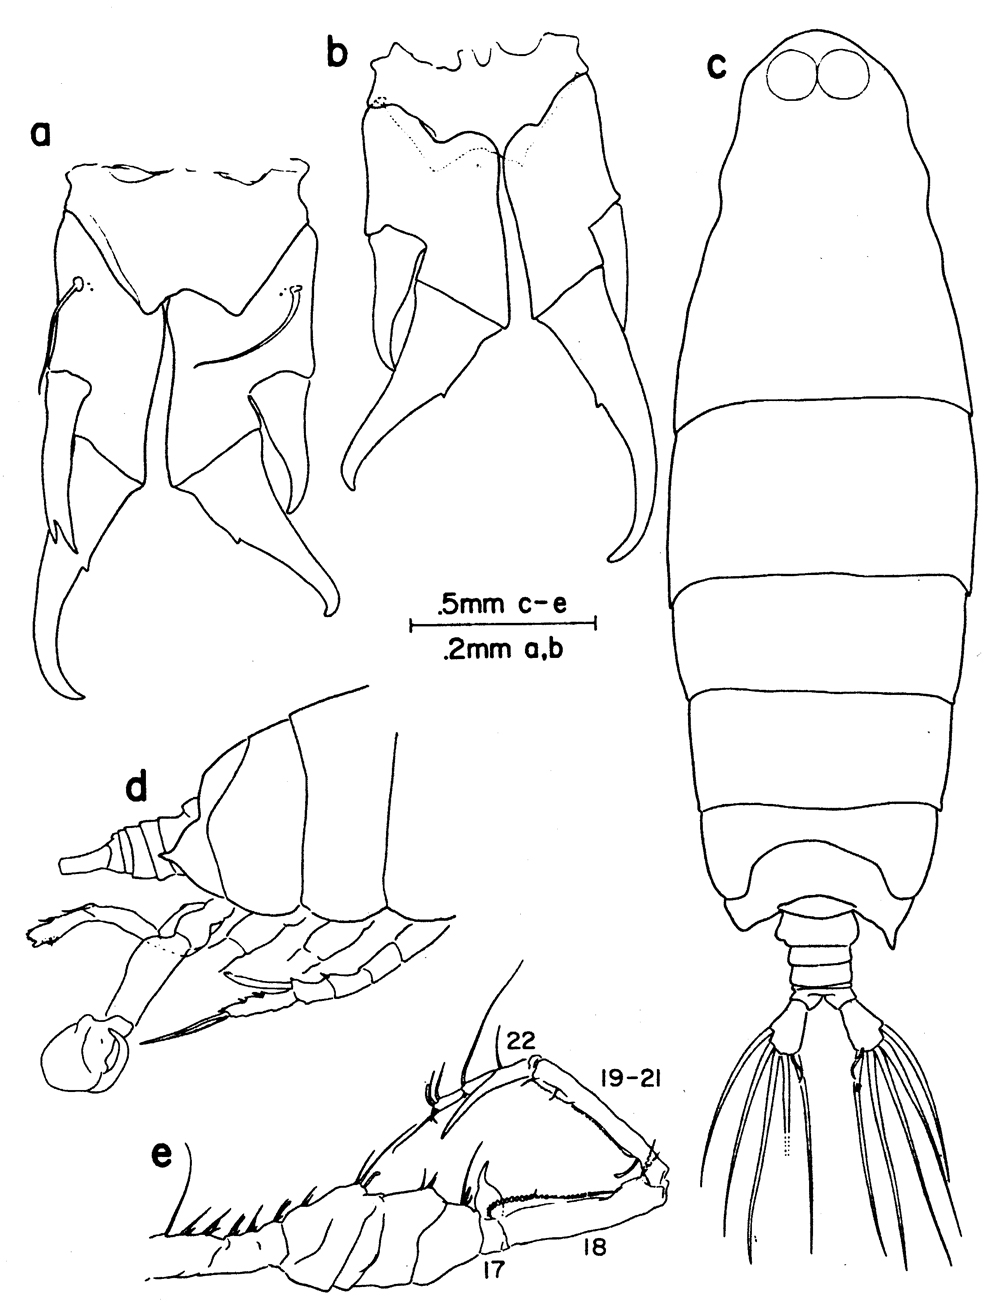 Espce Labidocera antiguae - Planche 2 de figures morphologiques